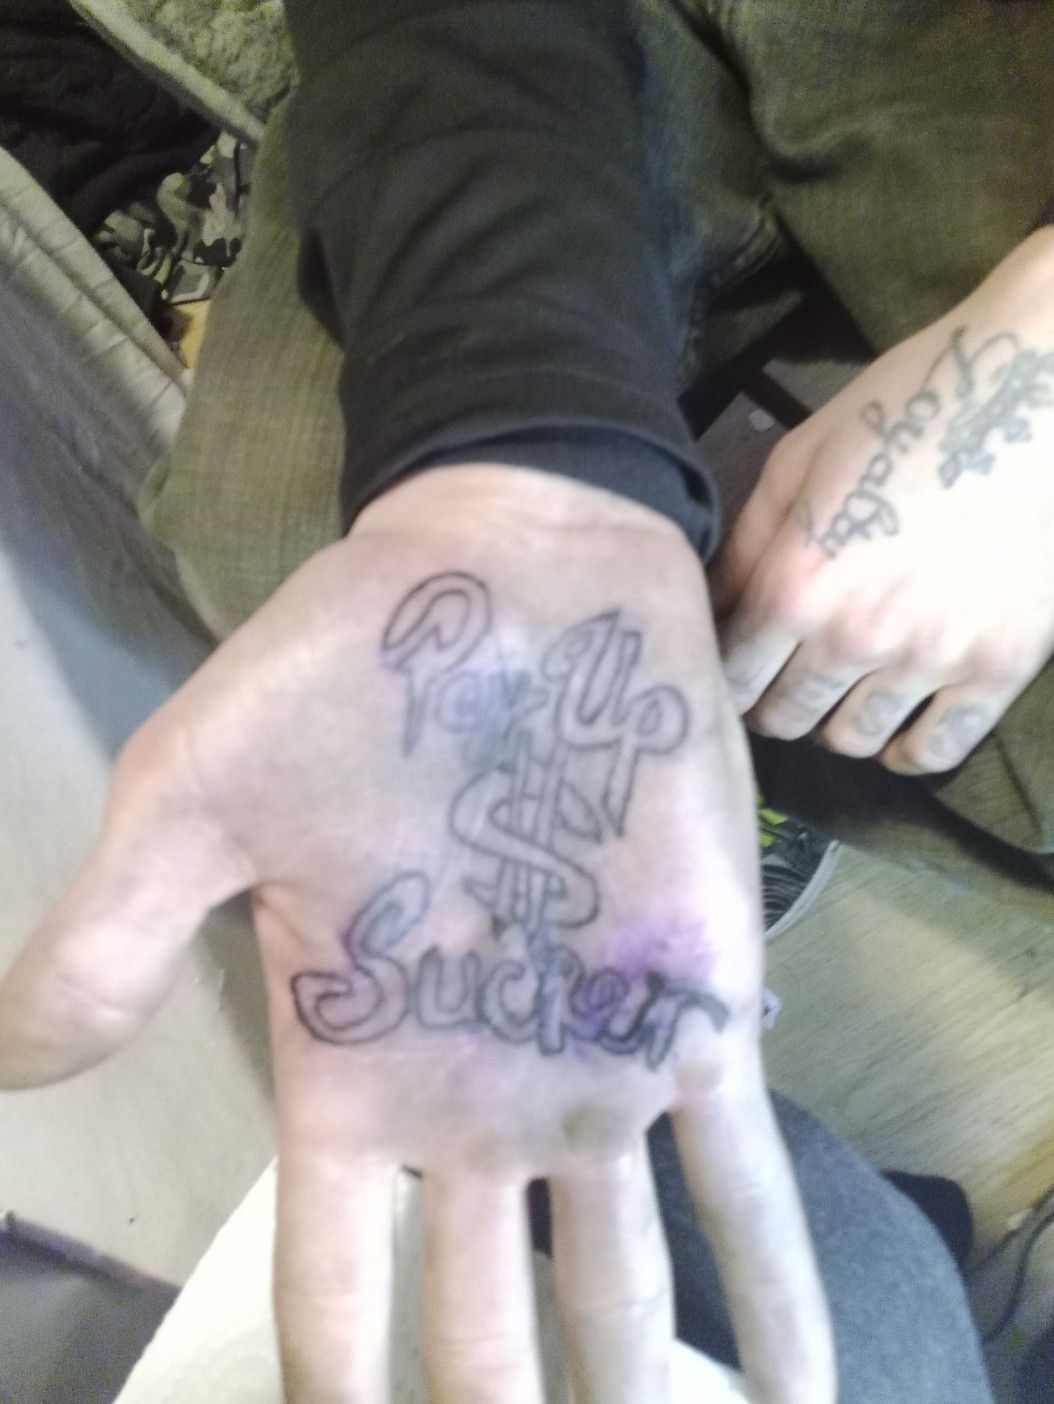 Jesse James  Pay Up Sucker Tattoo  YouTube